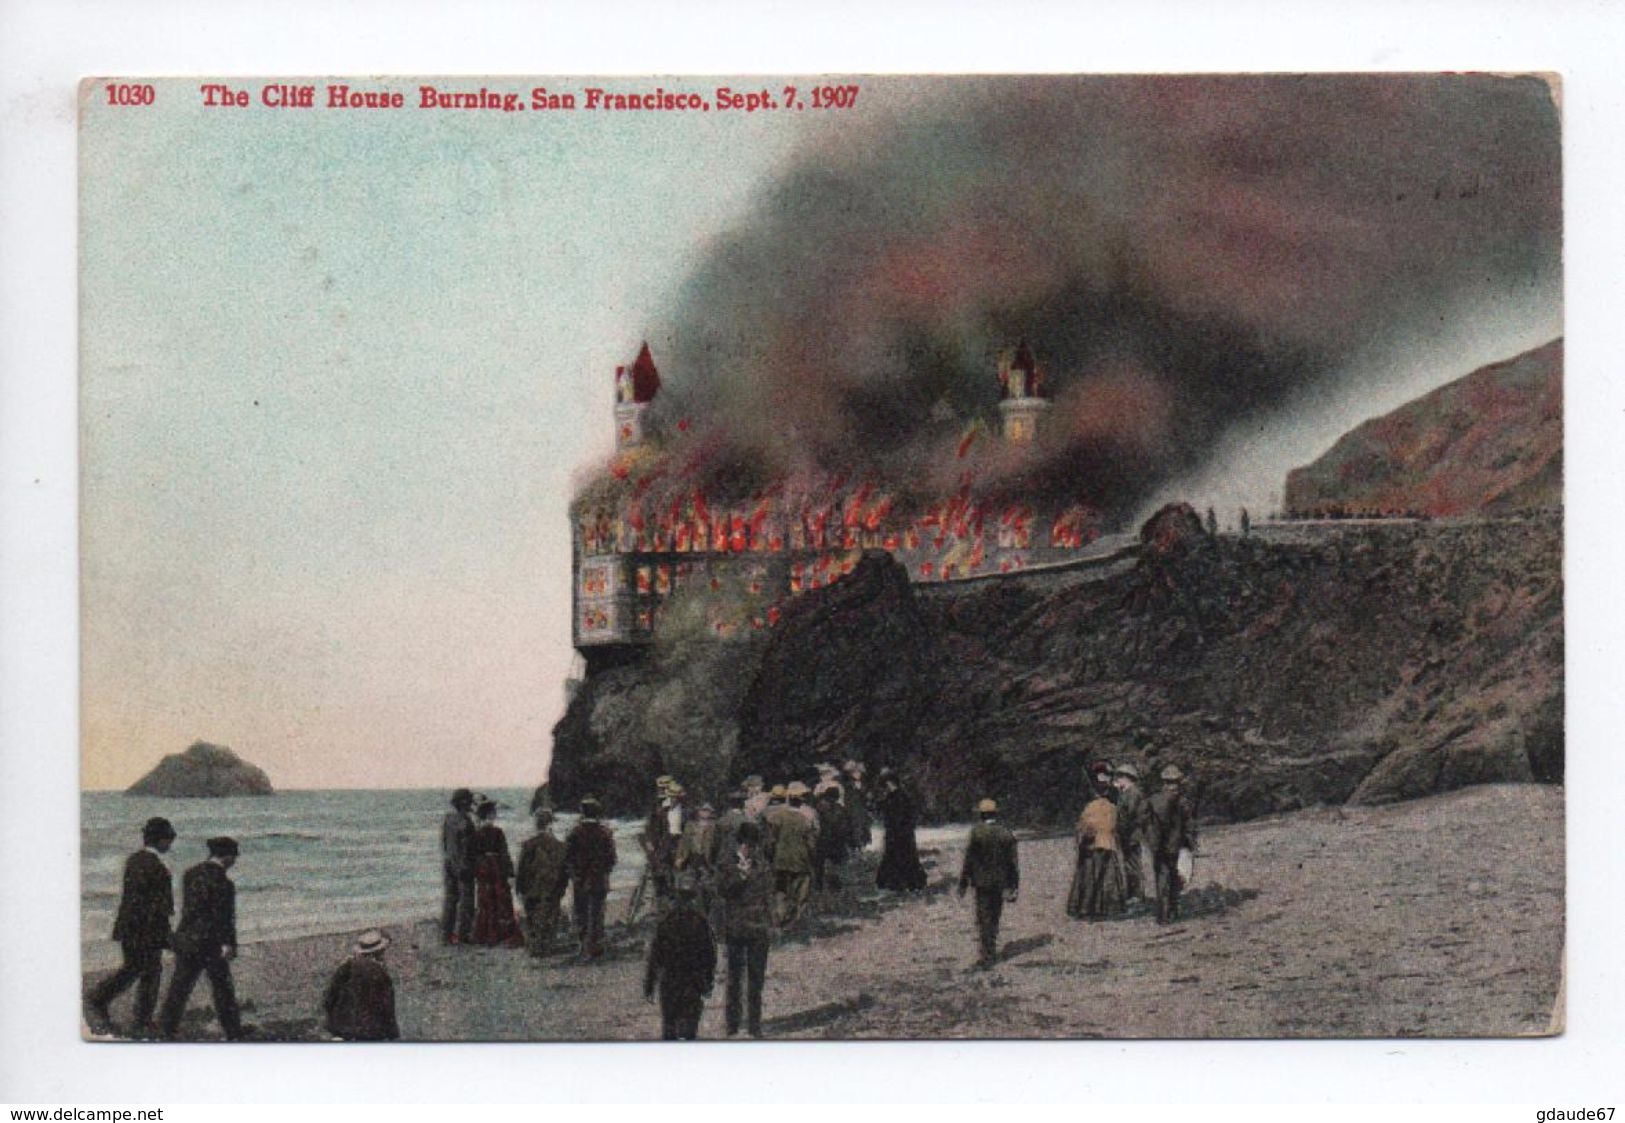 SAN FRANCISCO - THE CLIFF HOUSE BURNING - SEPT 7. 1907 - San Francisco